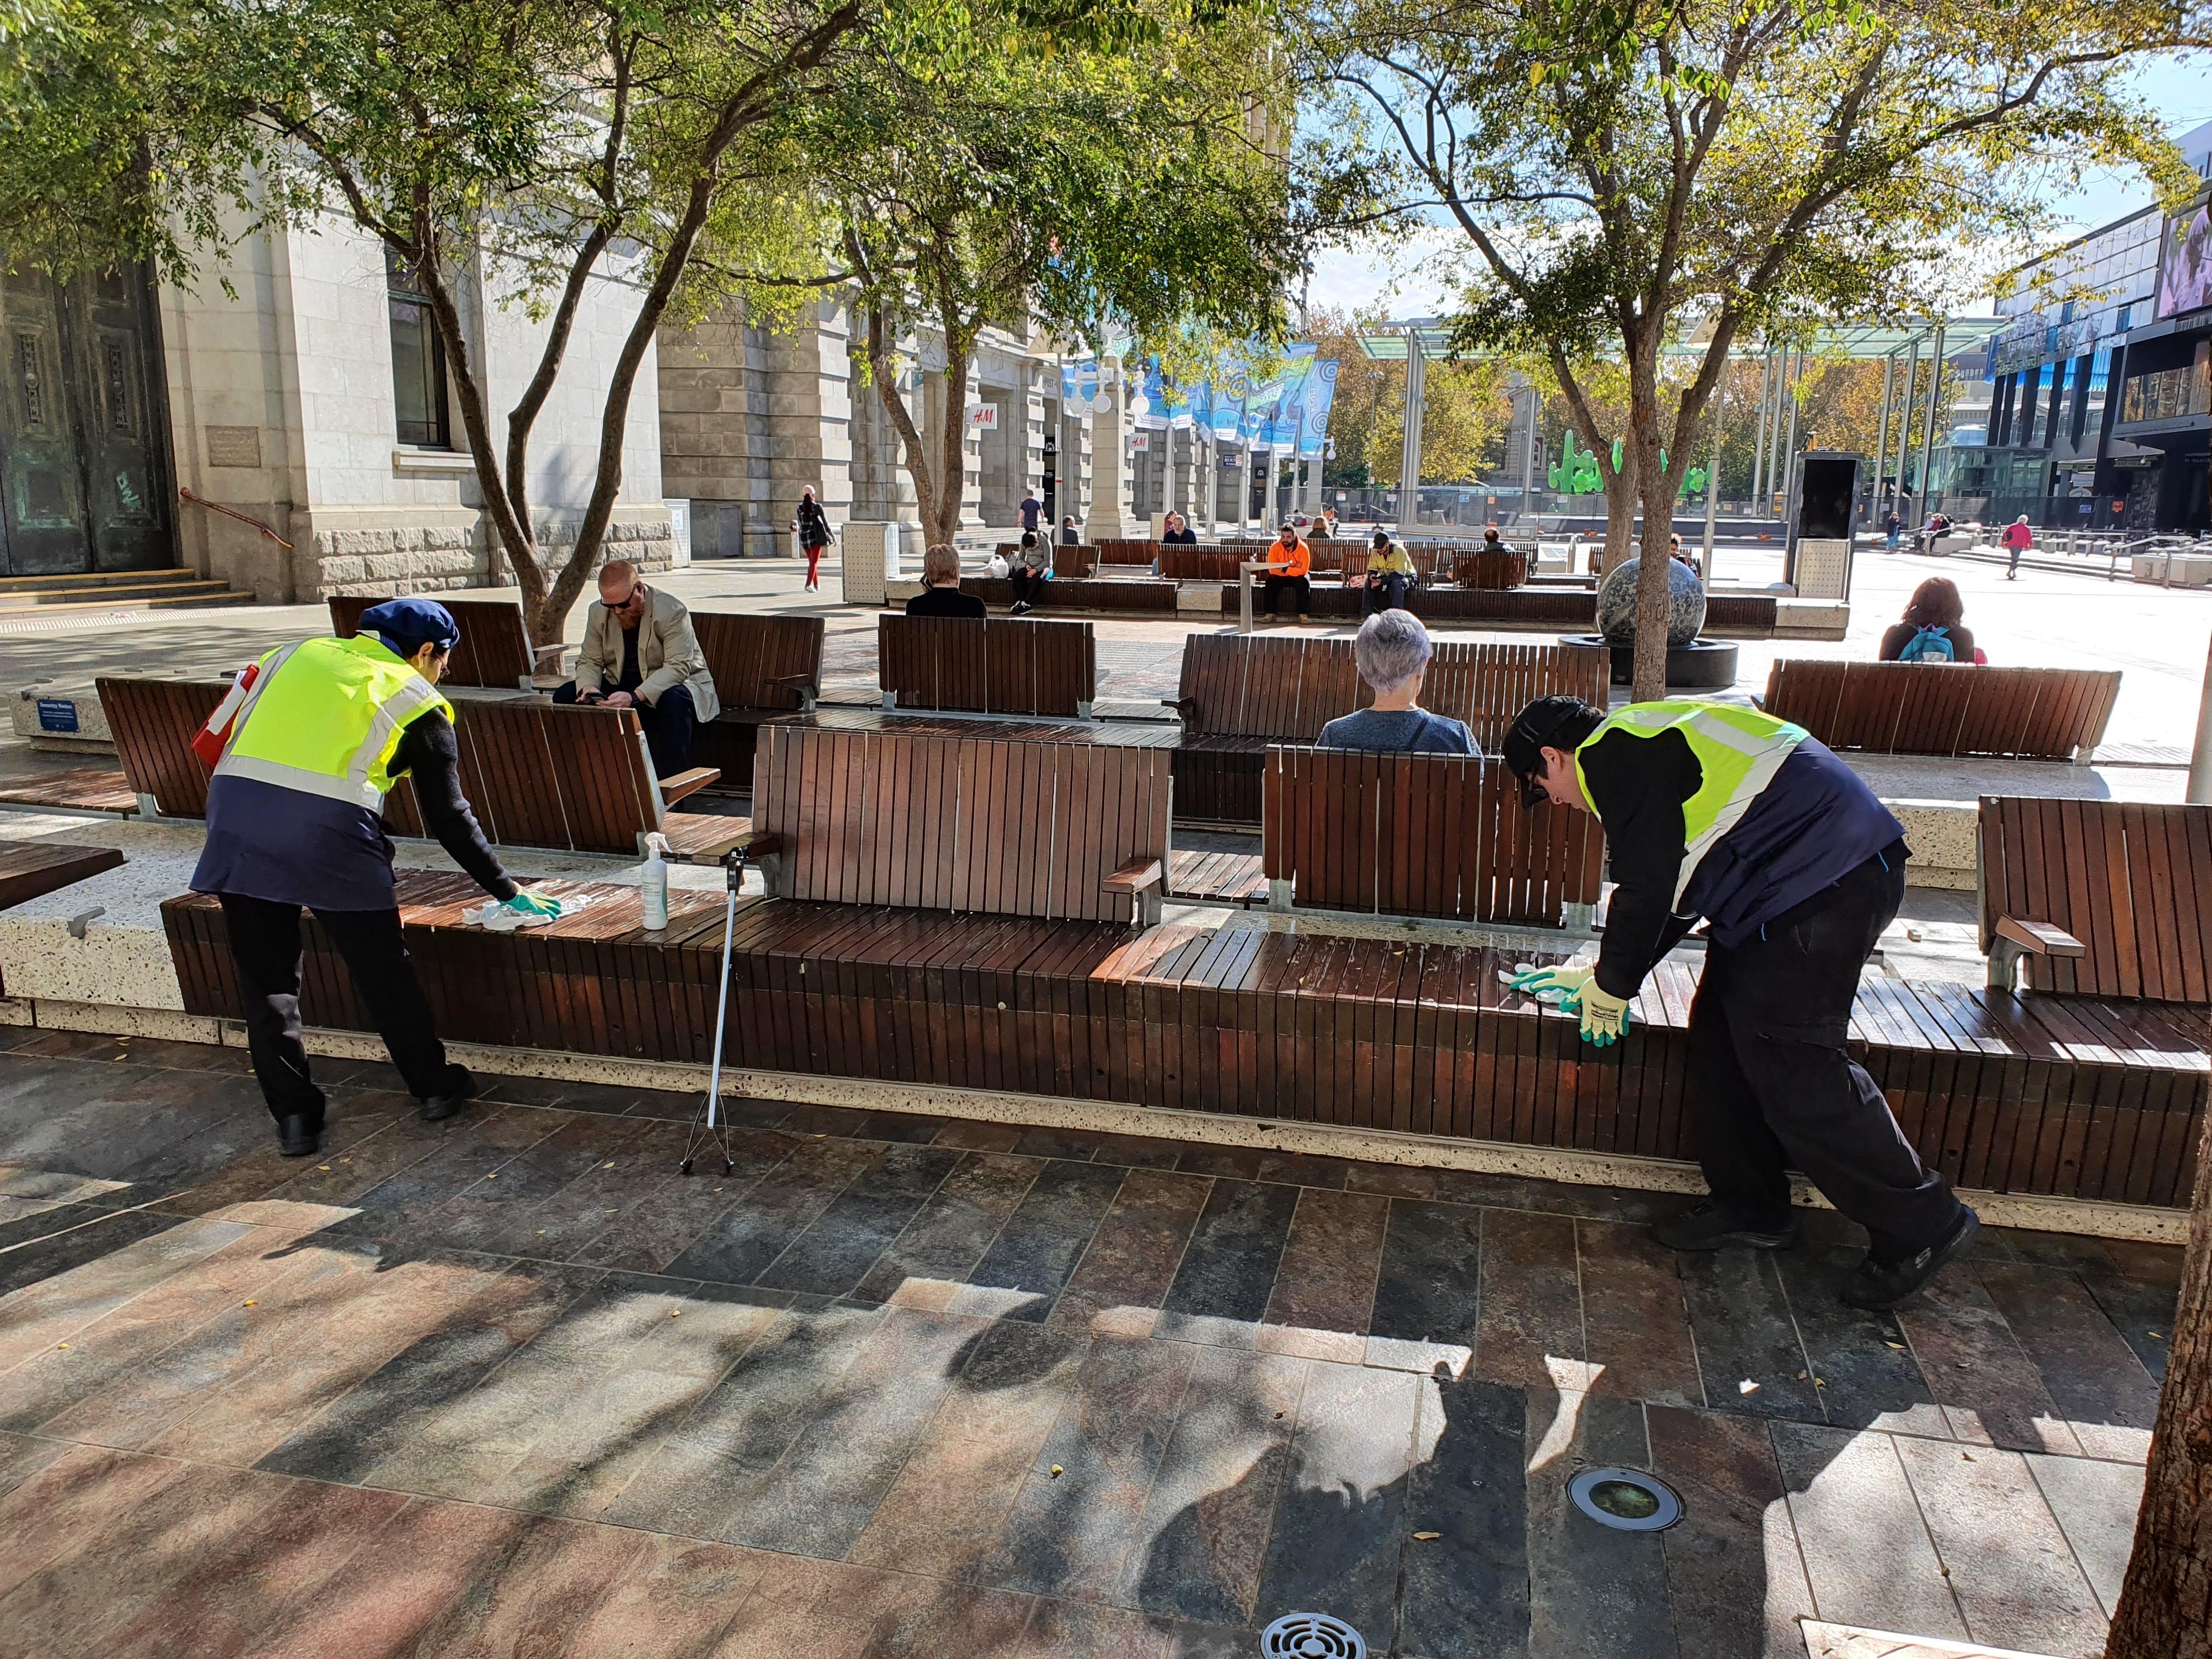 City of Perth staff sanitising public areas